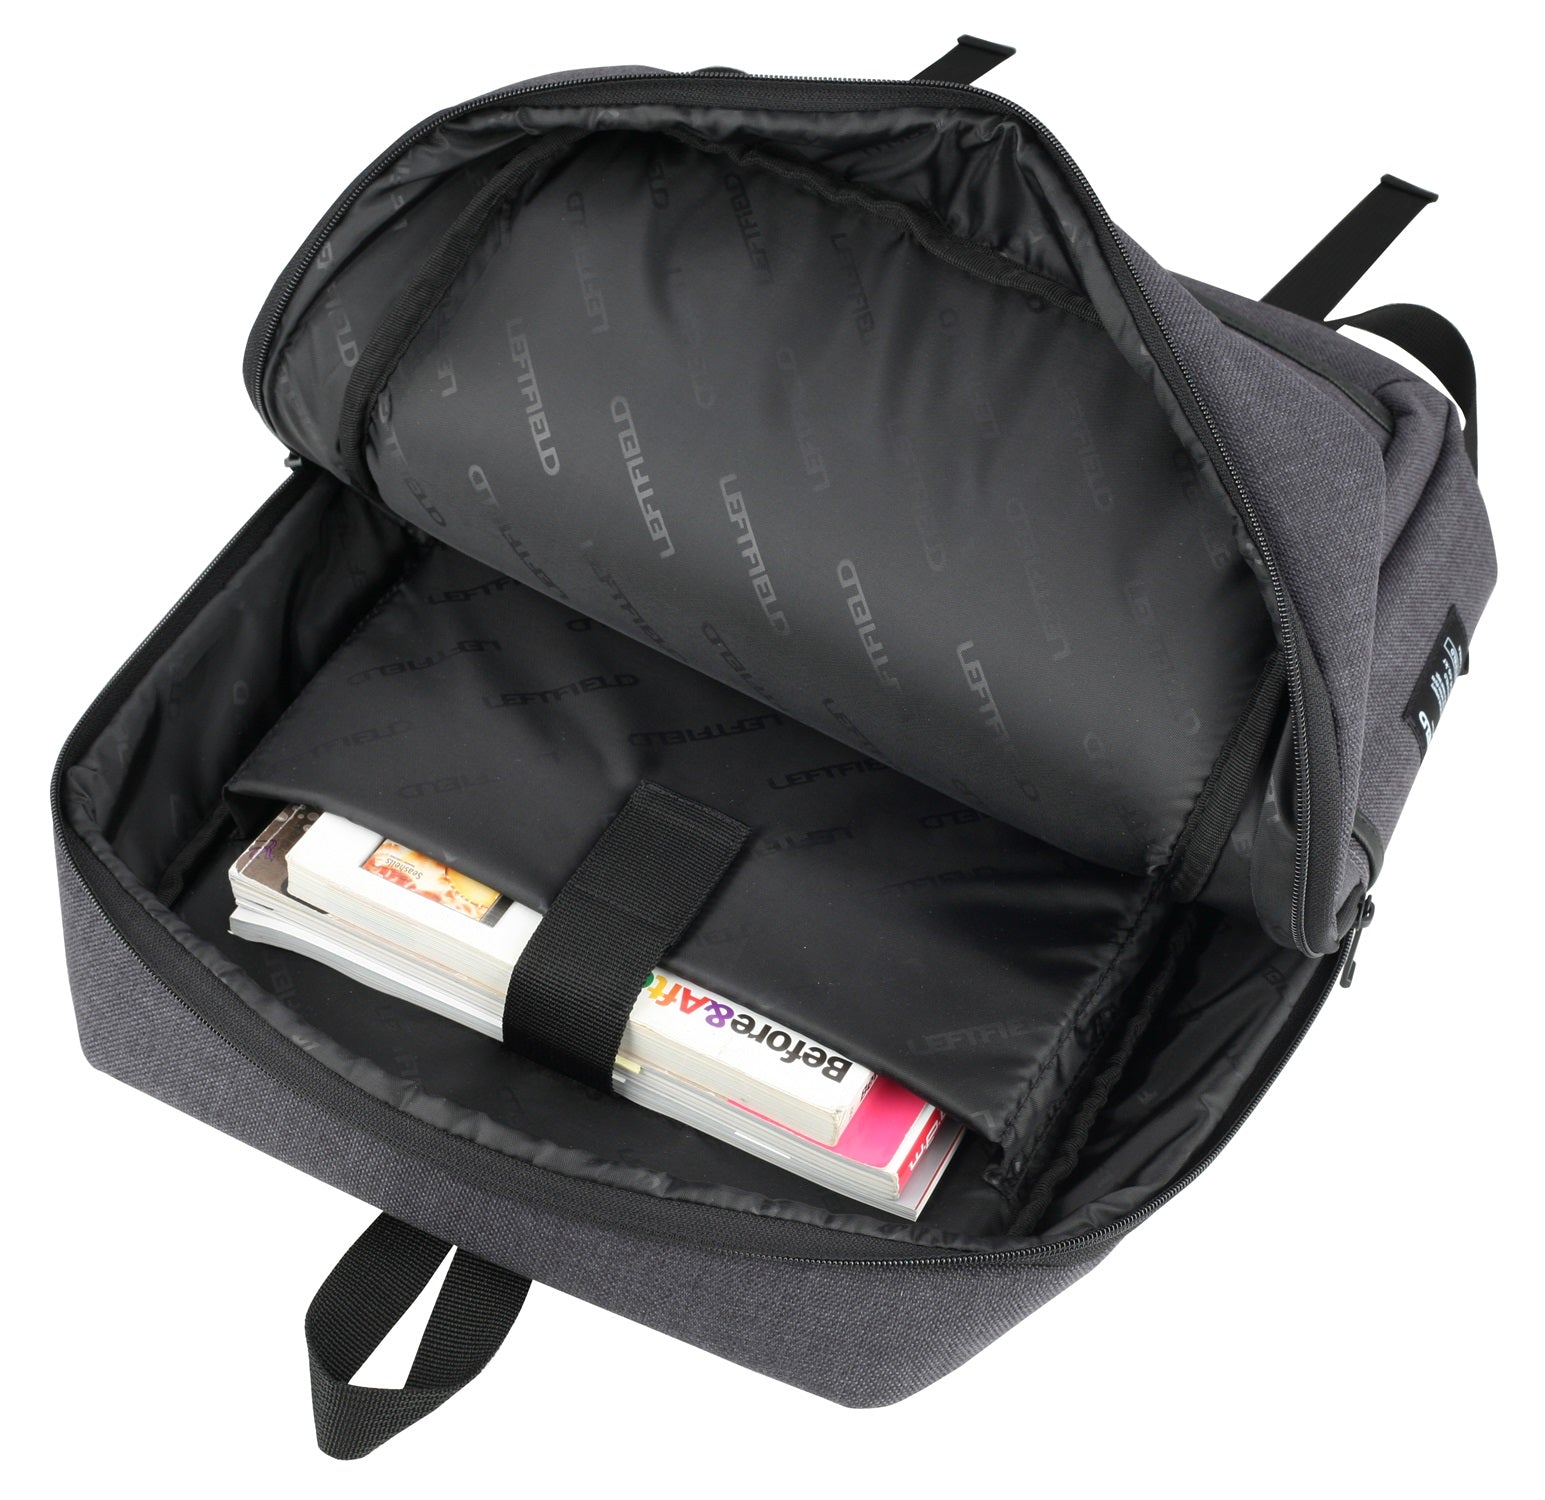 Black Square Canvas School Laptop Backpacks Travel Hiking Bags